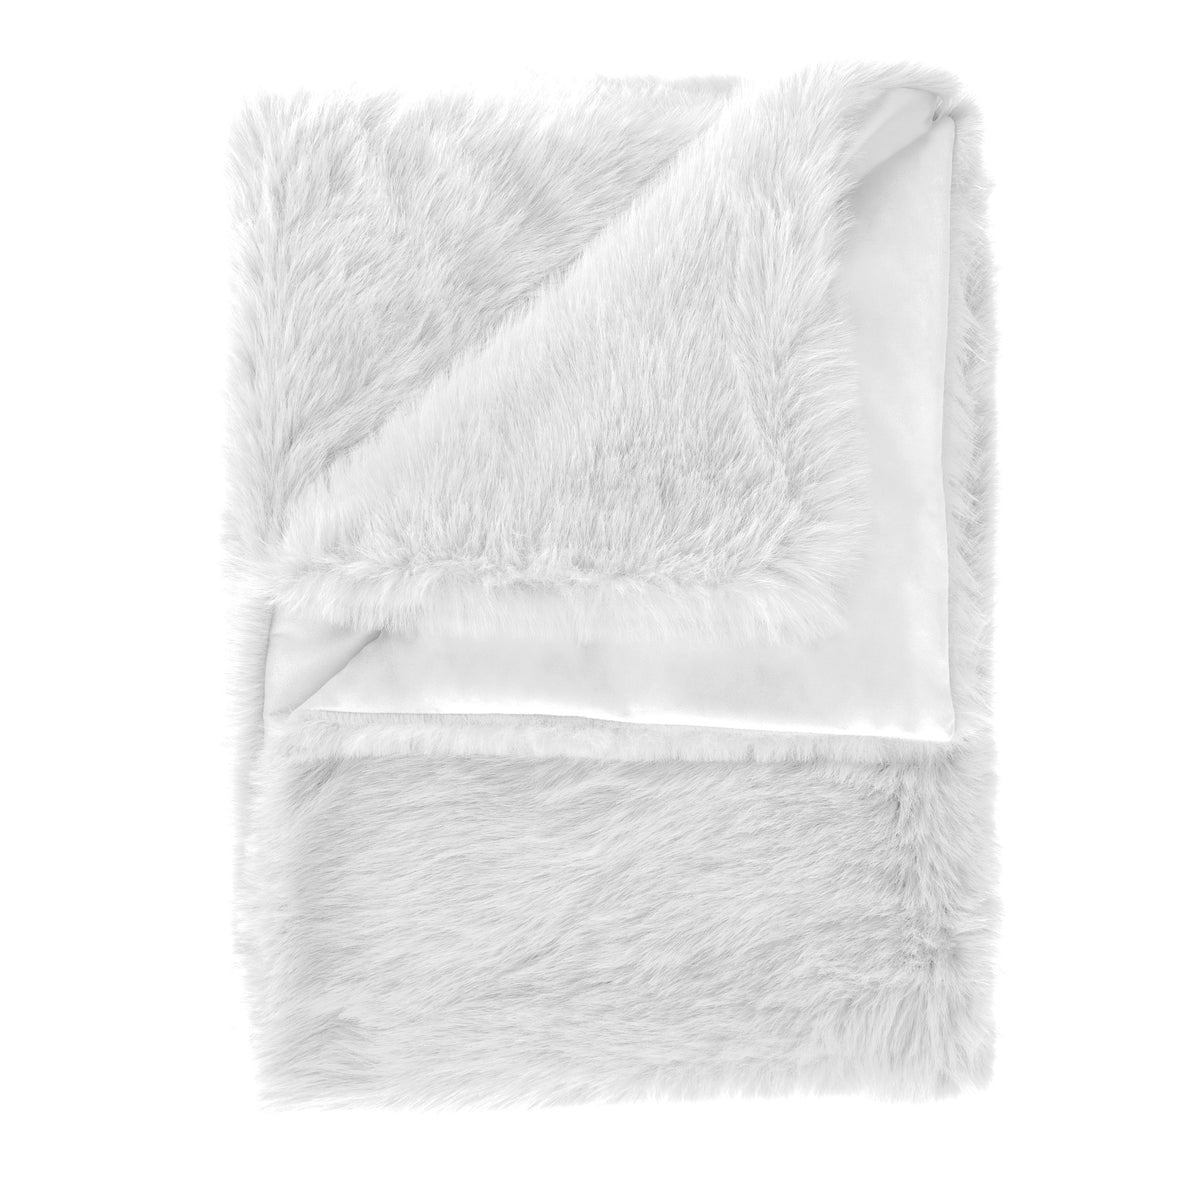 Plaid Perle Misty White - Fake Fur